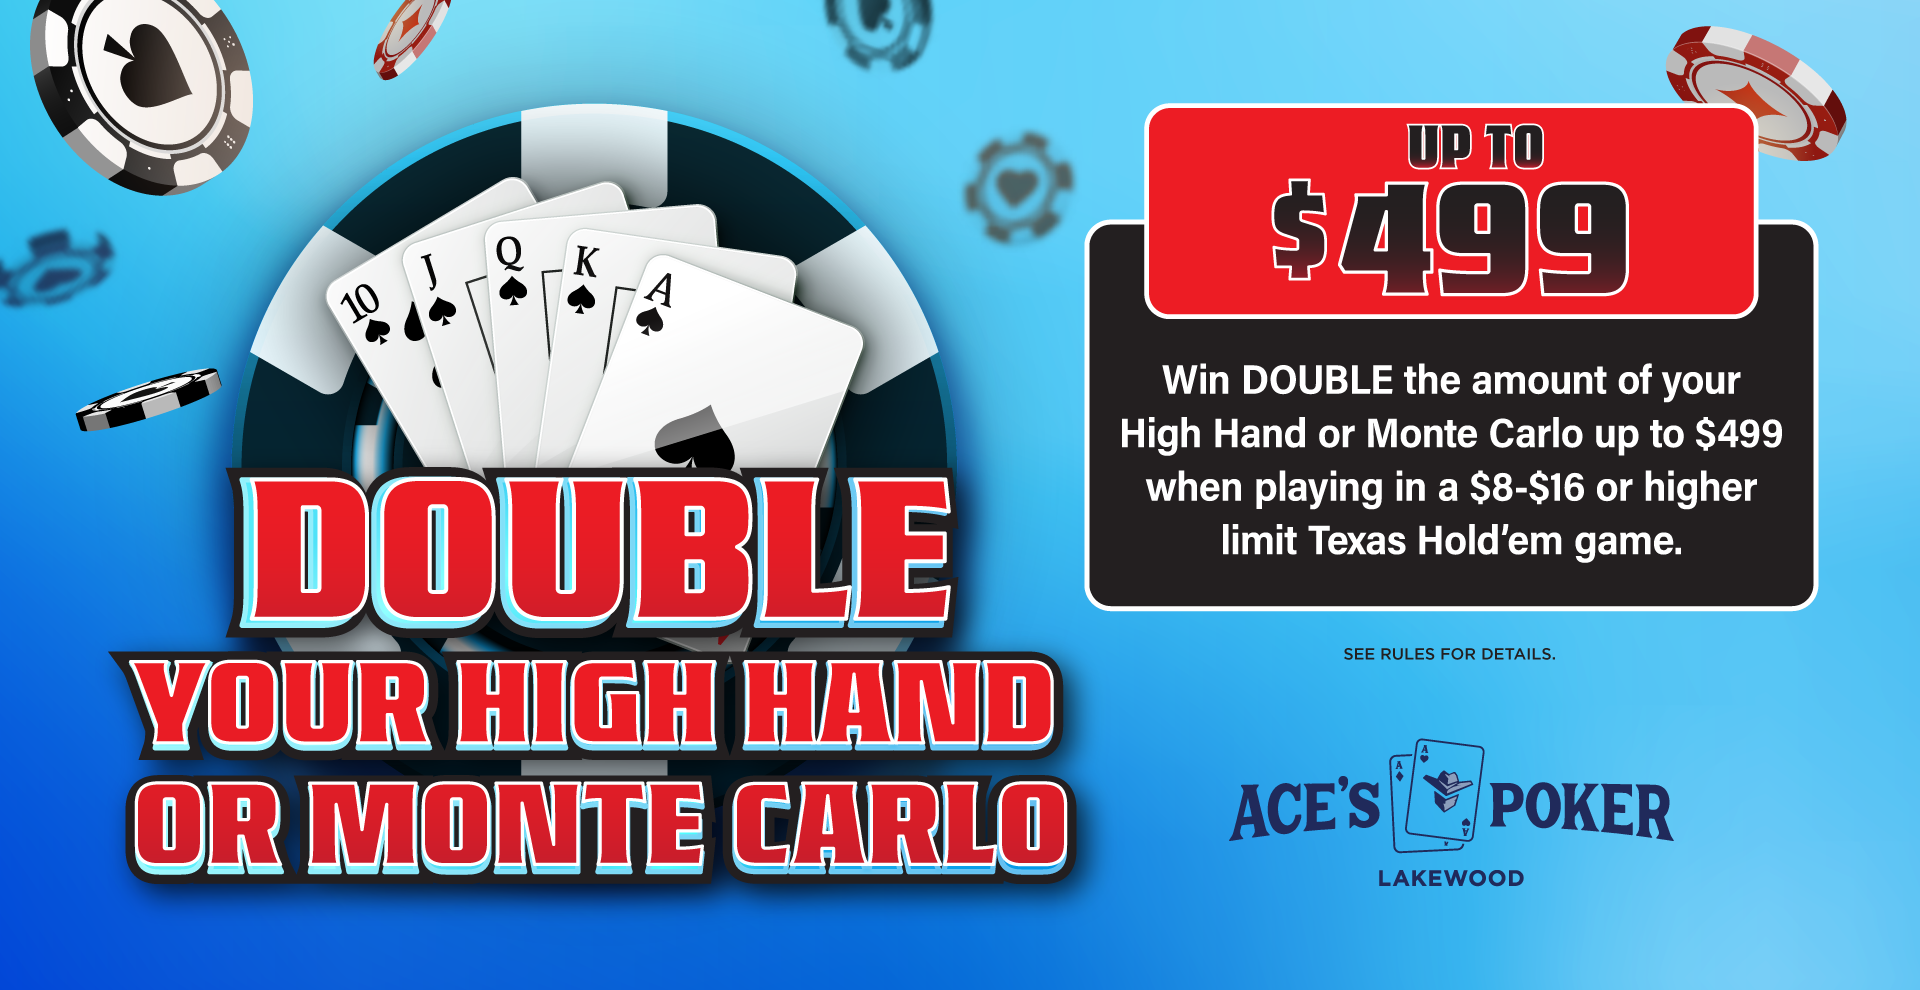 Ace's Poker Lakewood Washington | Poker High Hand or Monte Carlo